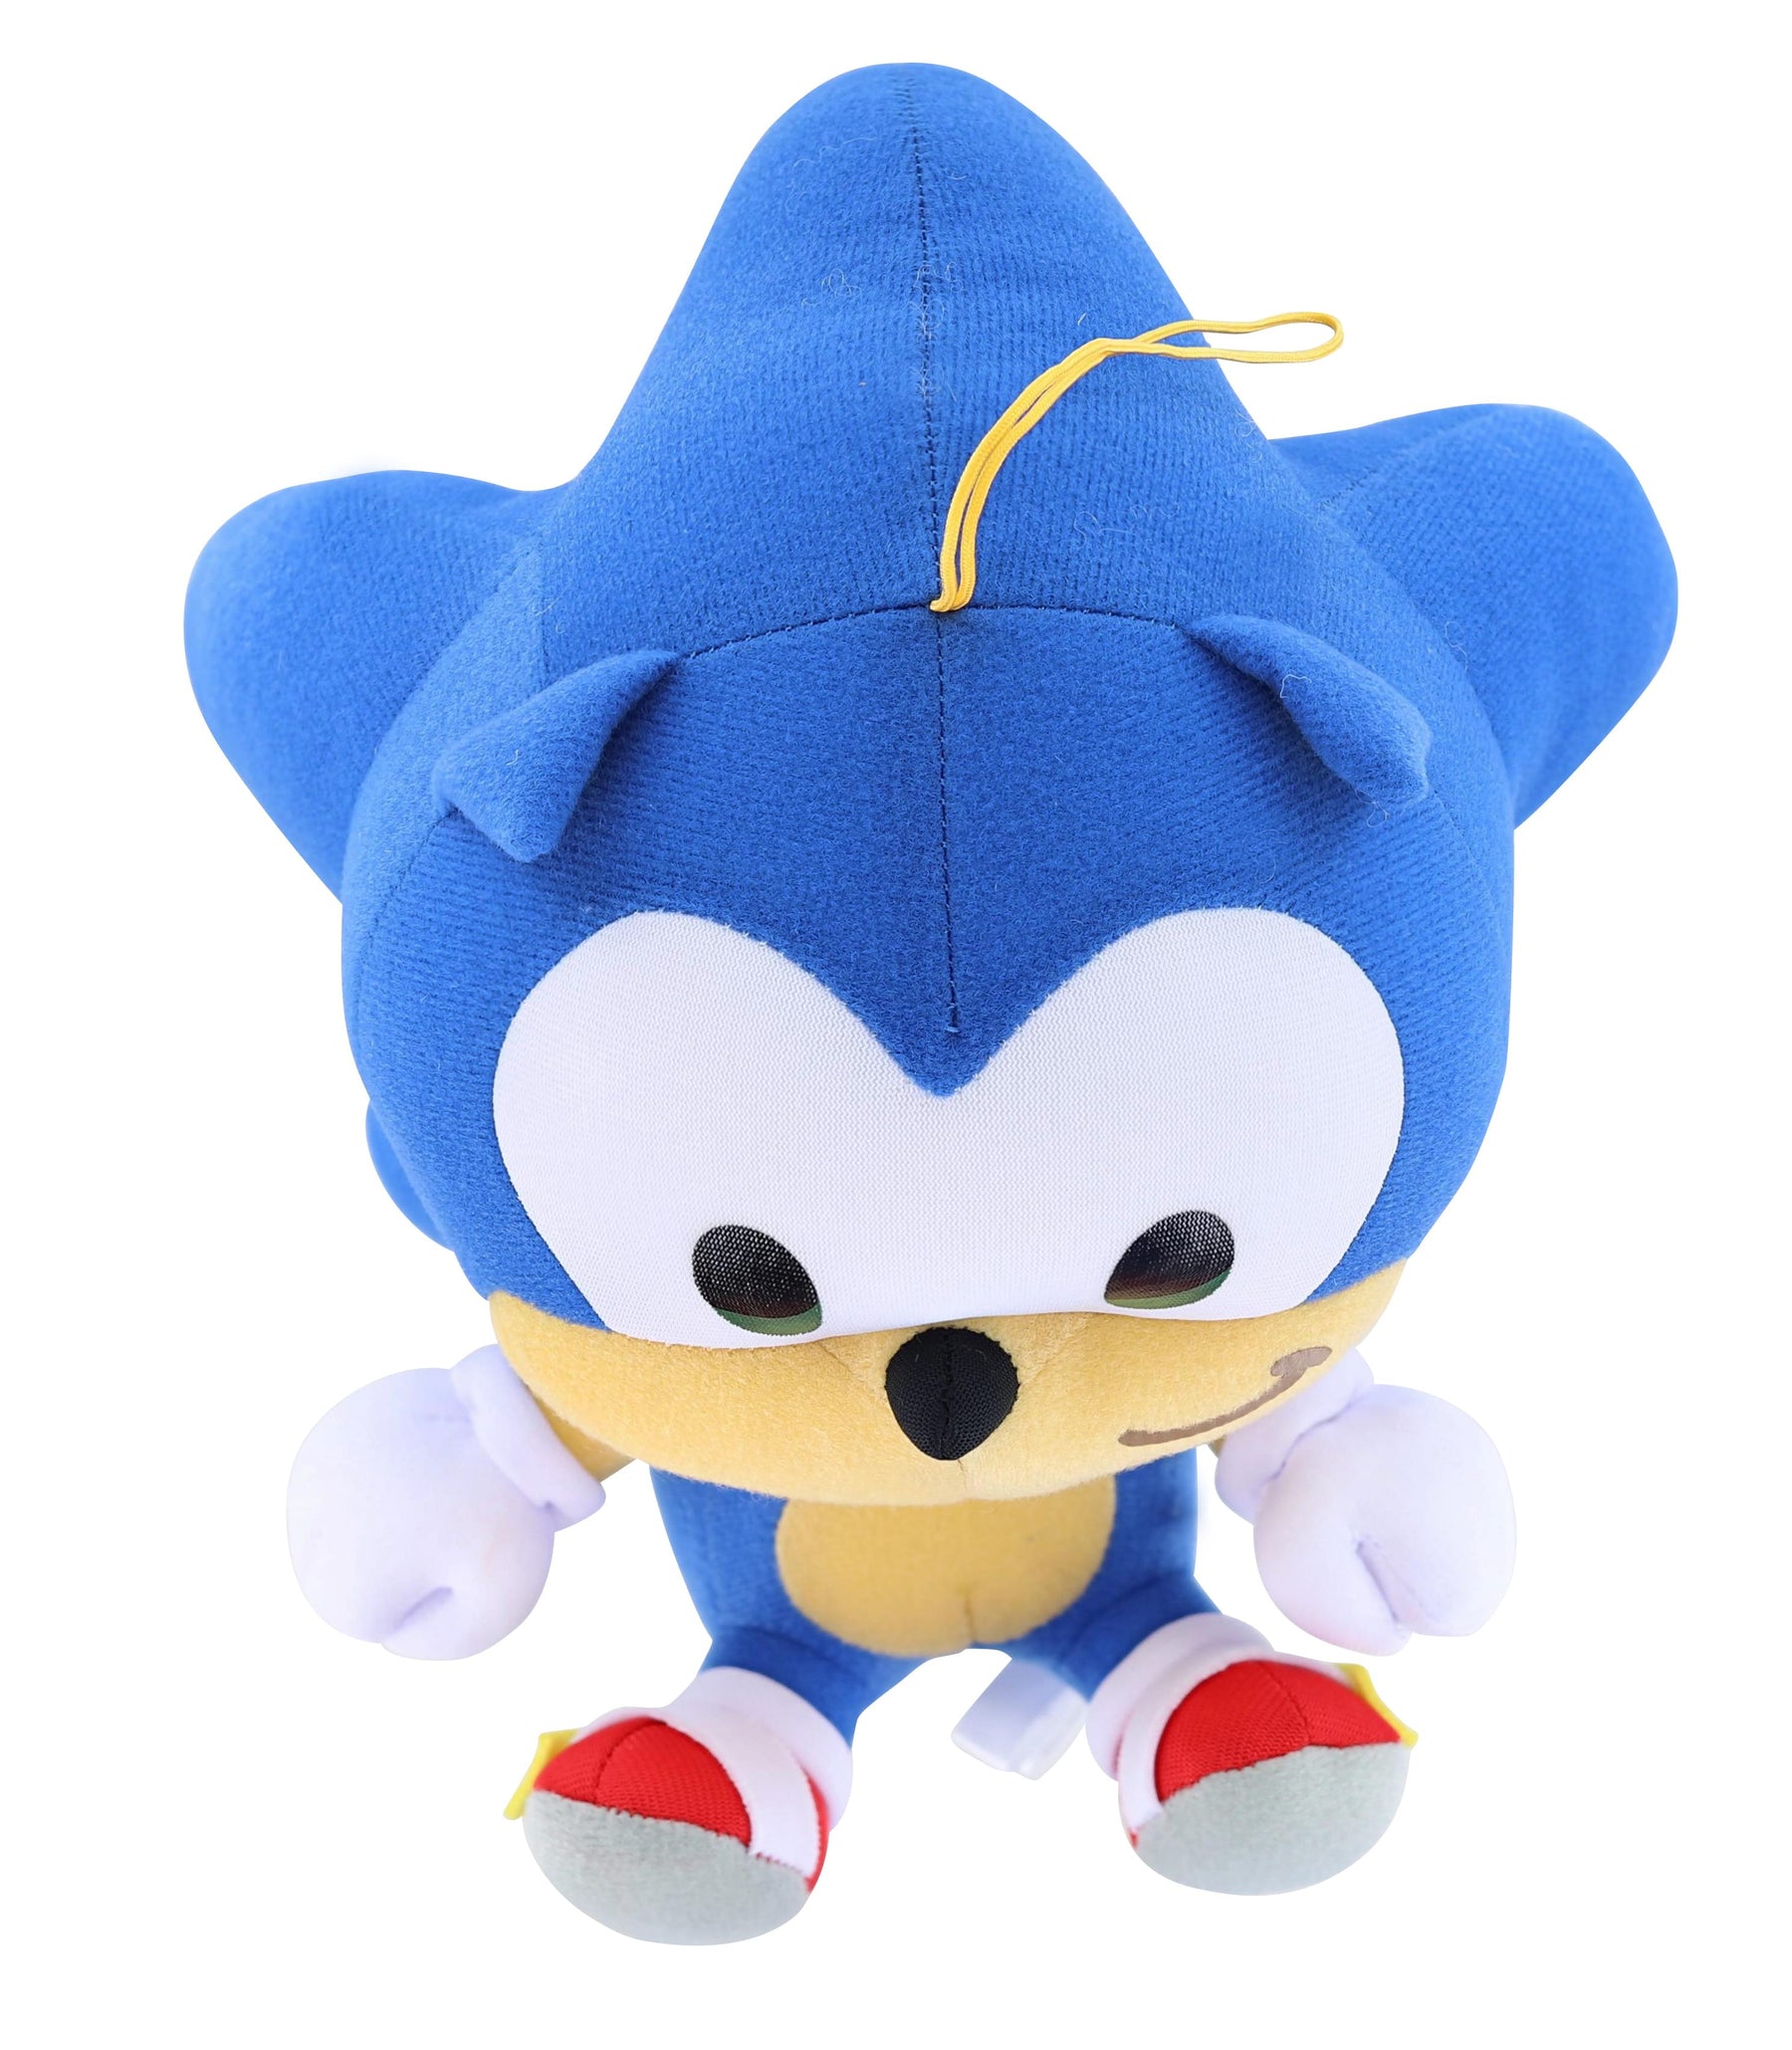  Sonic Plush  15 Dark Sonic Plushie Toys for Fans